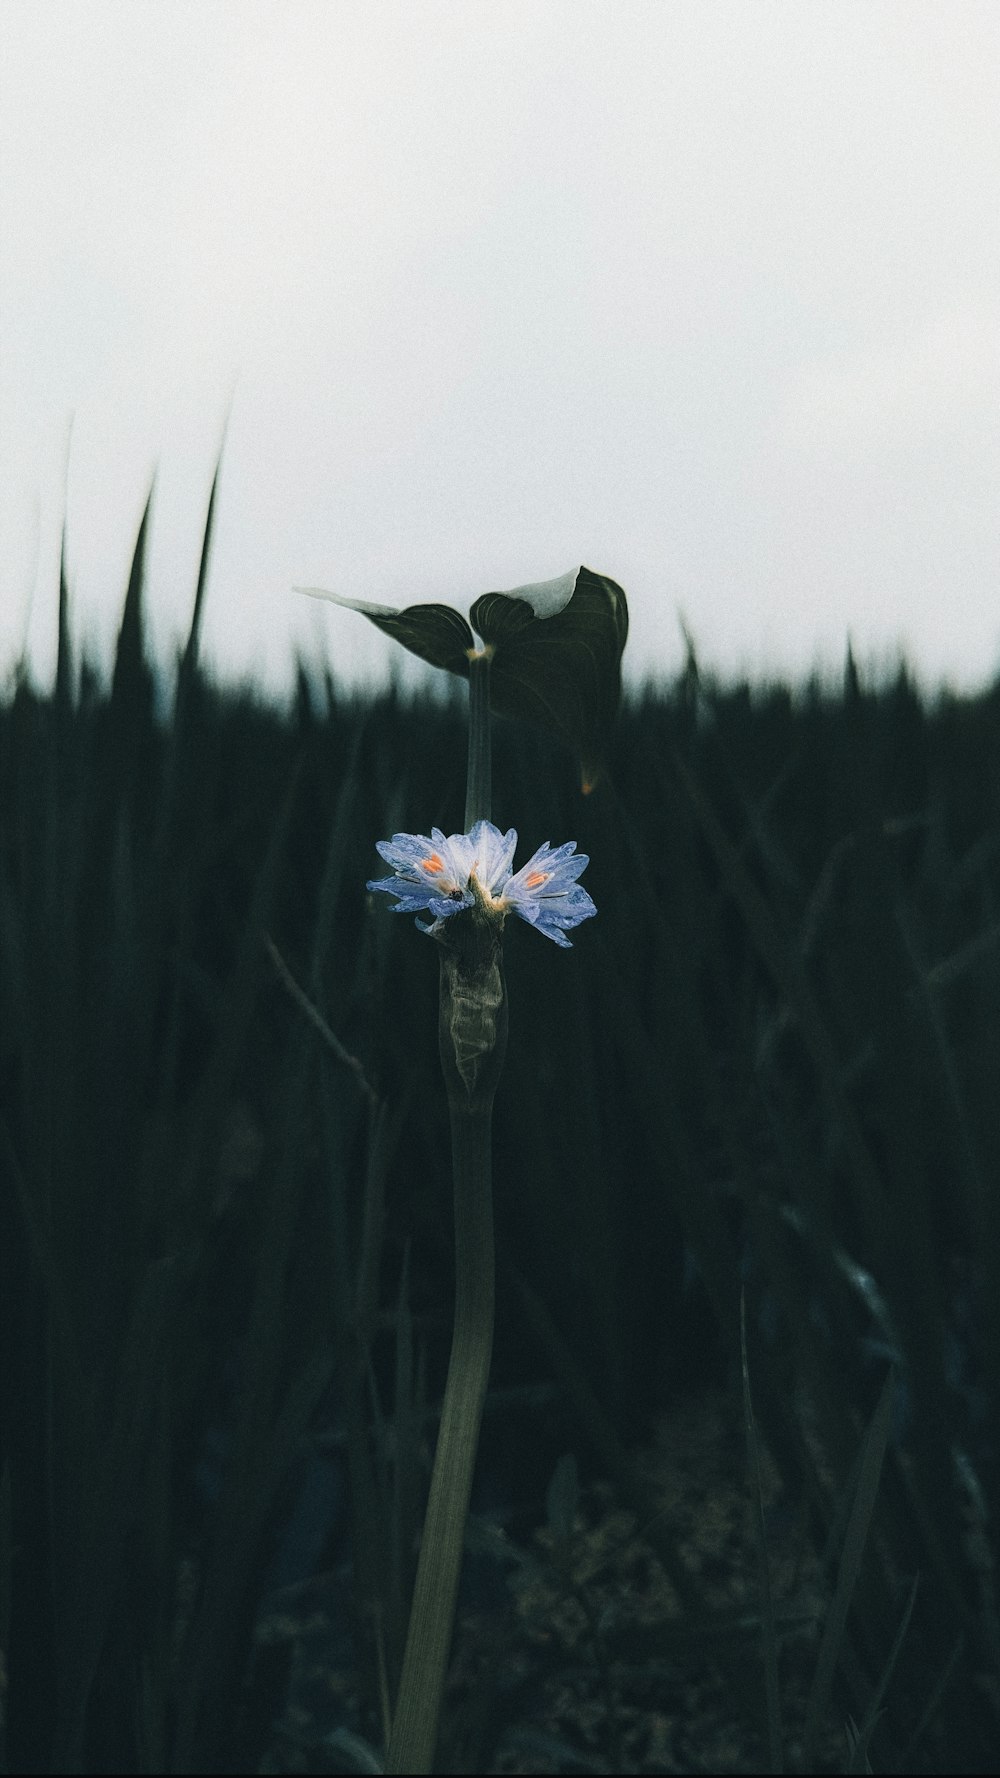 a single flower in a field of tall grass